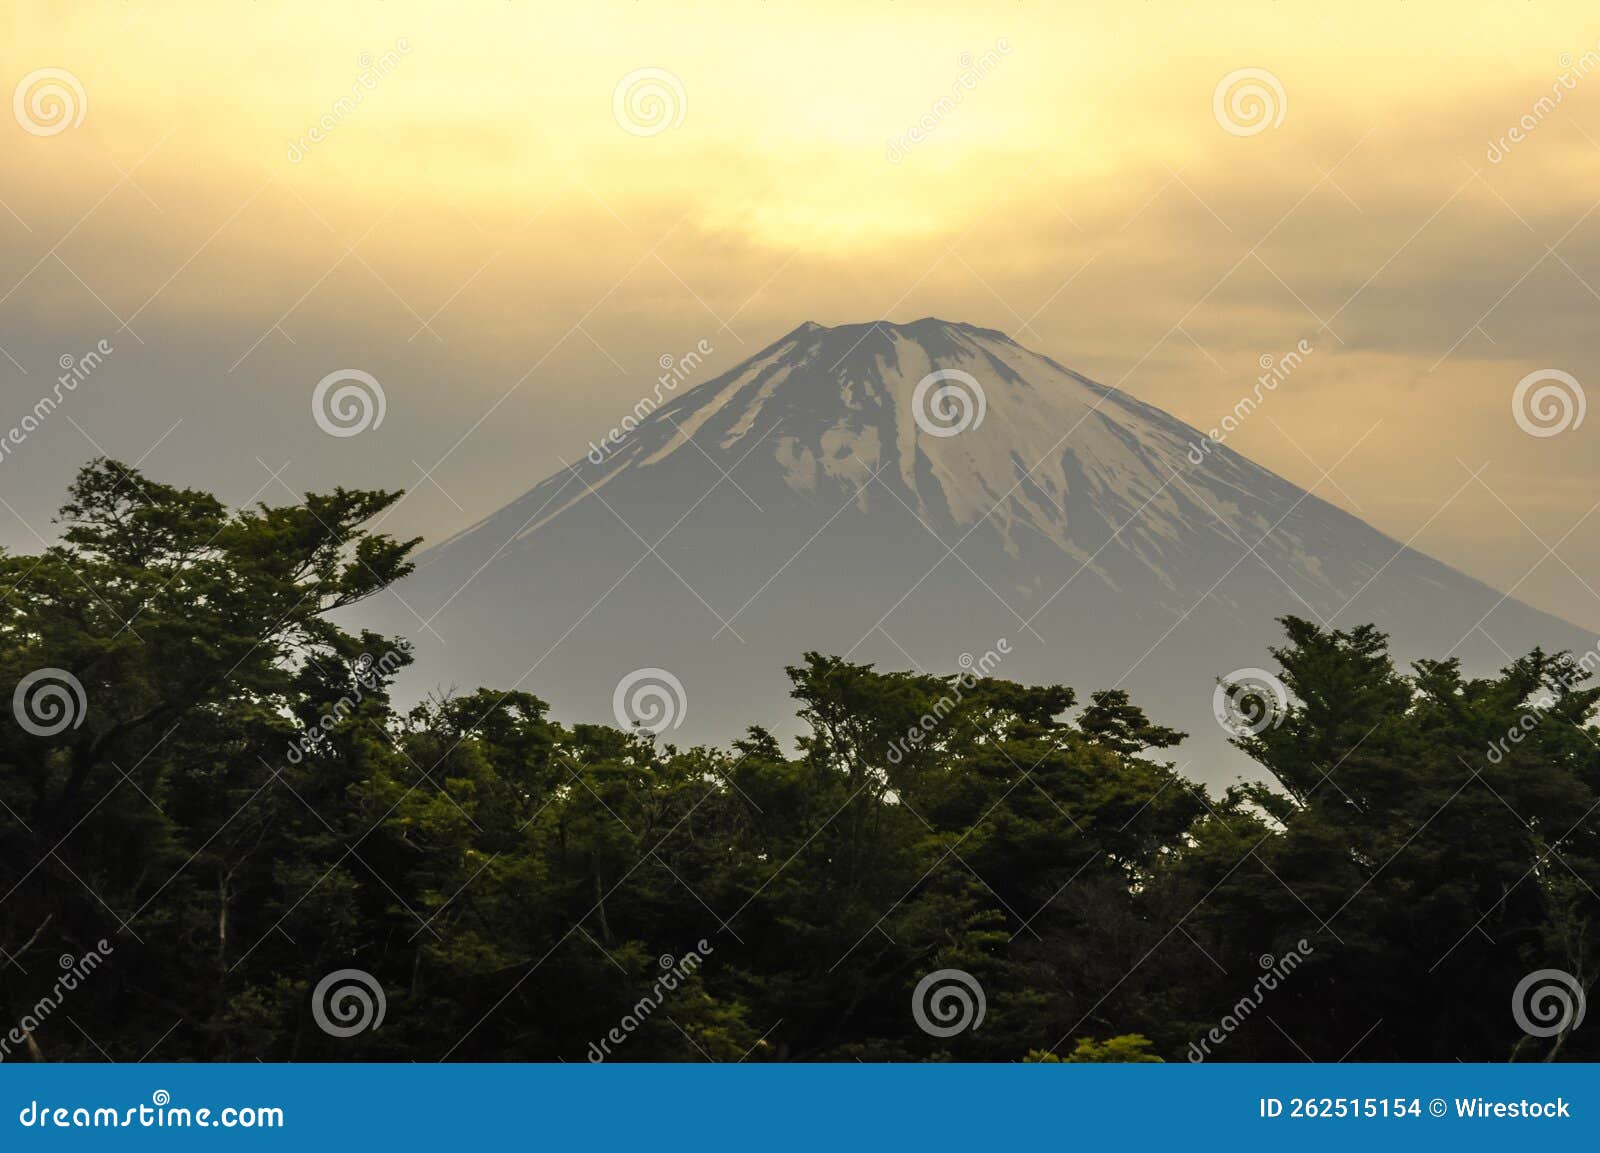 mount fuji from the fumaroles in mount hakone, hakone, kanagawa prefecture, japan. the picture is in